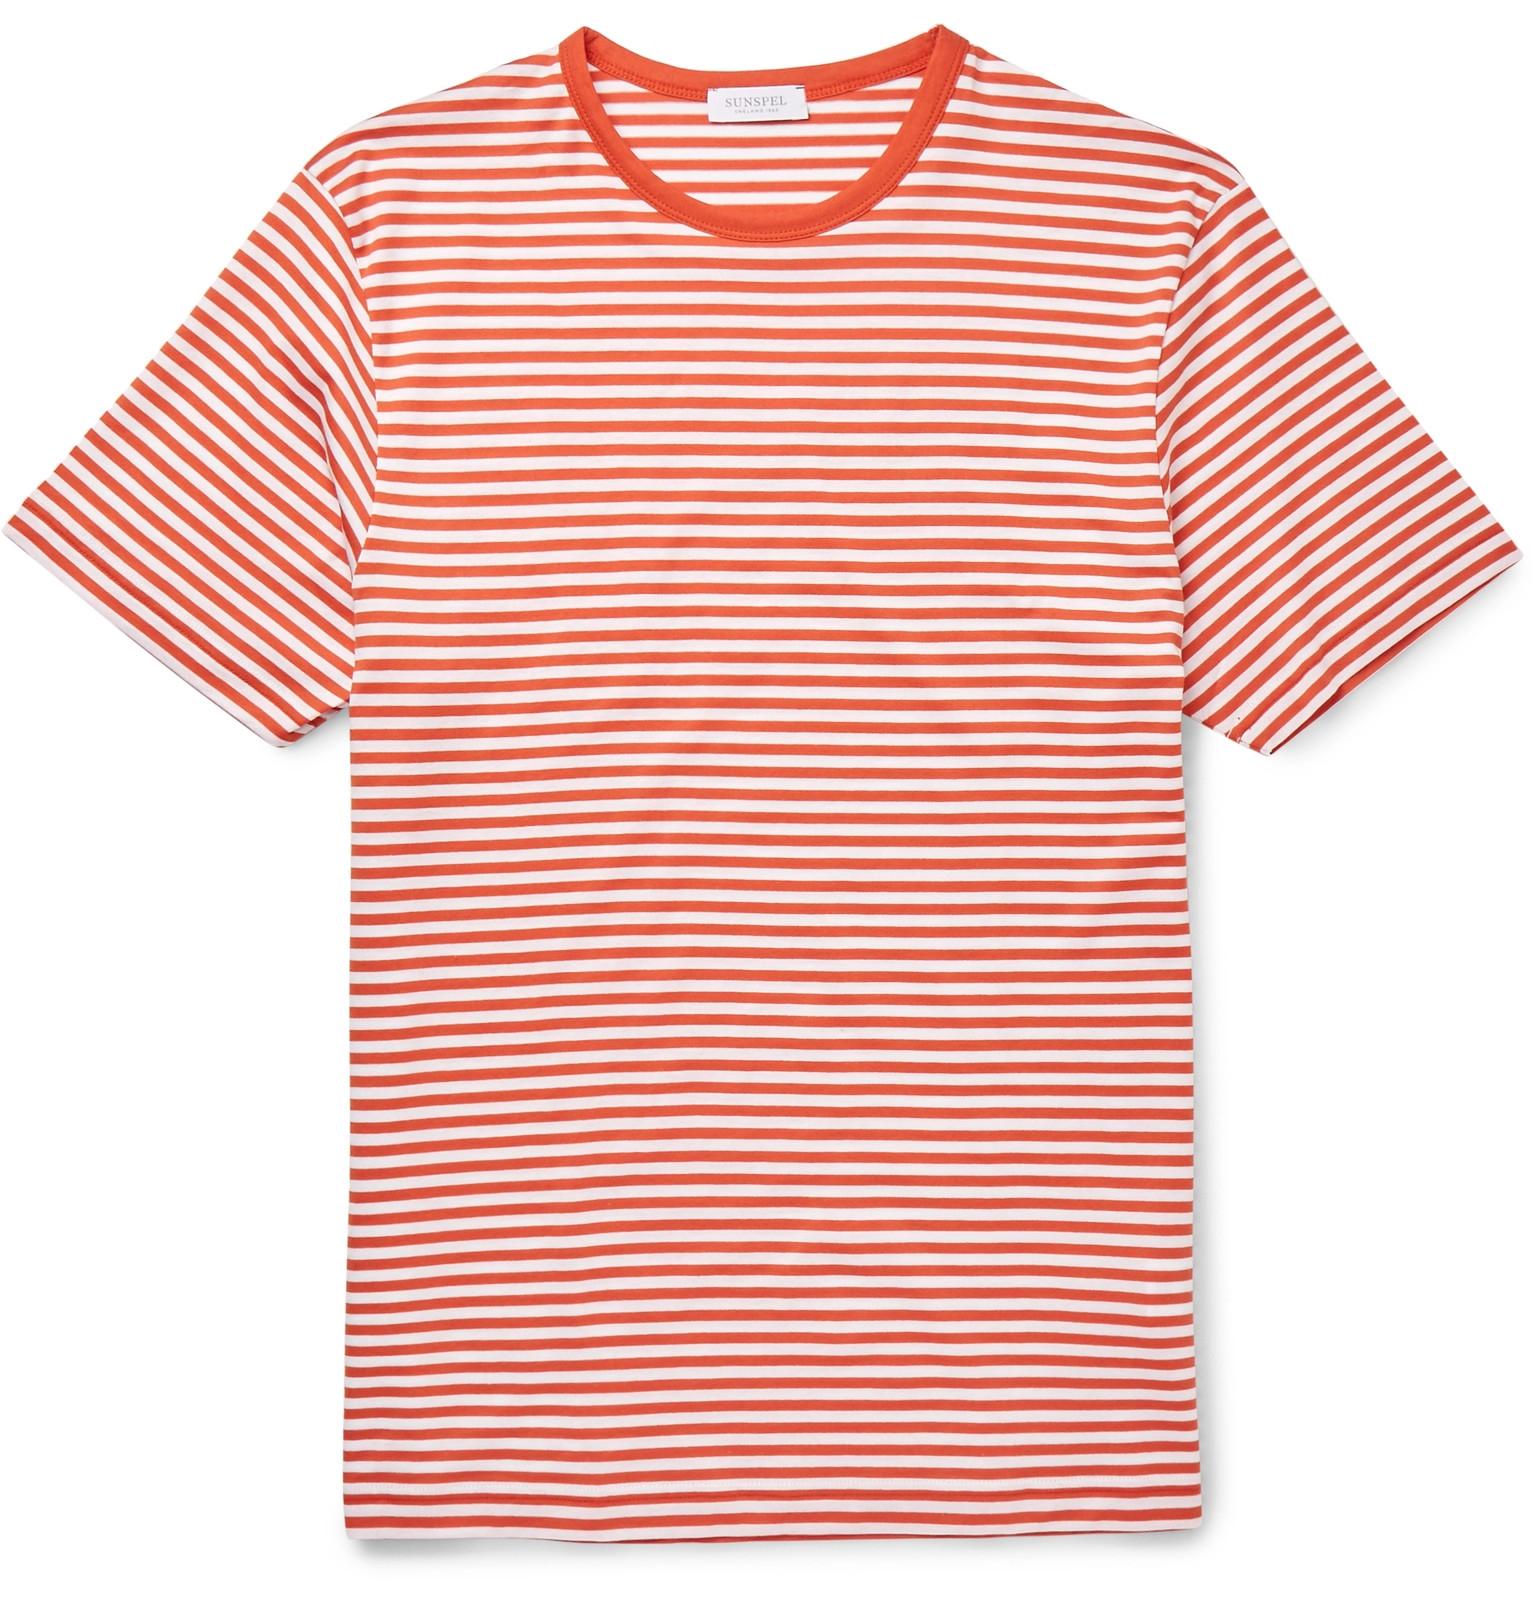 Lyst - Sunspel Slim-fit Striped Cotton-jersey T-shirt in Orange for Men